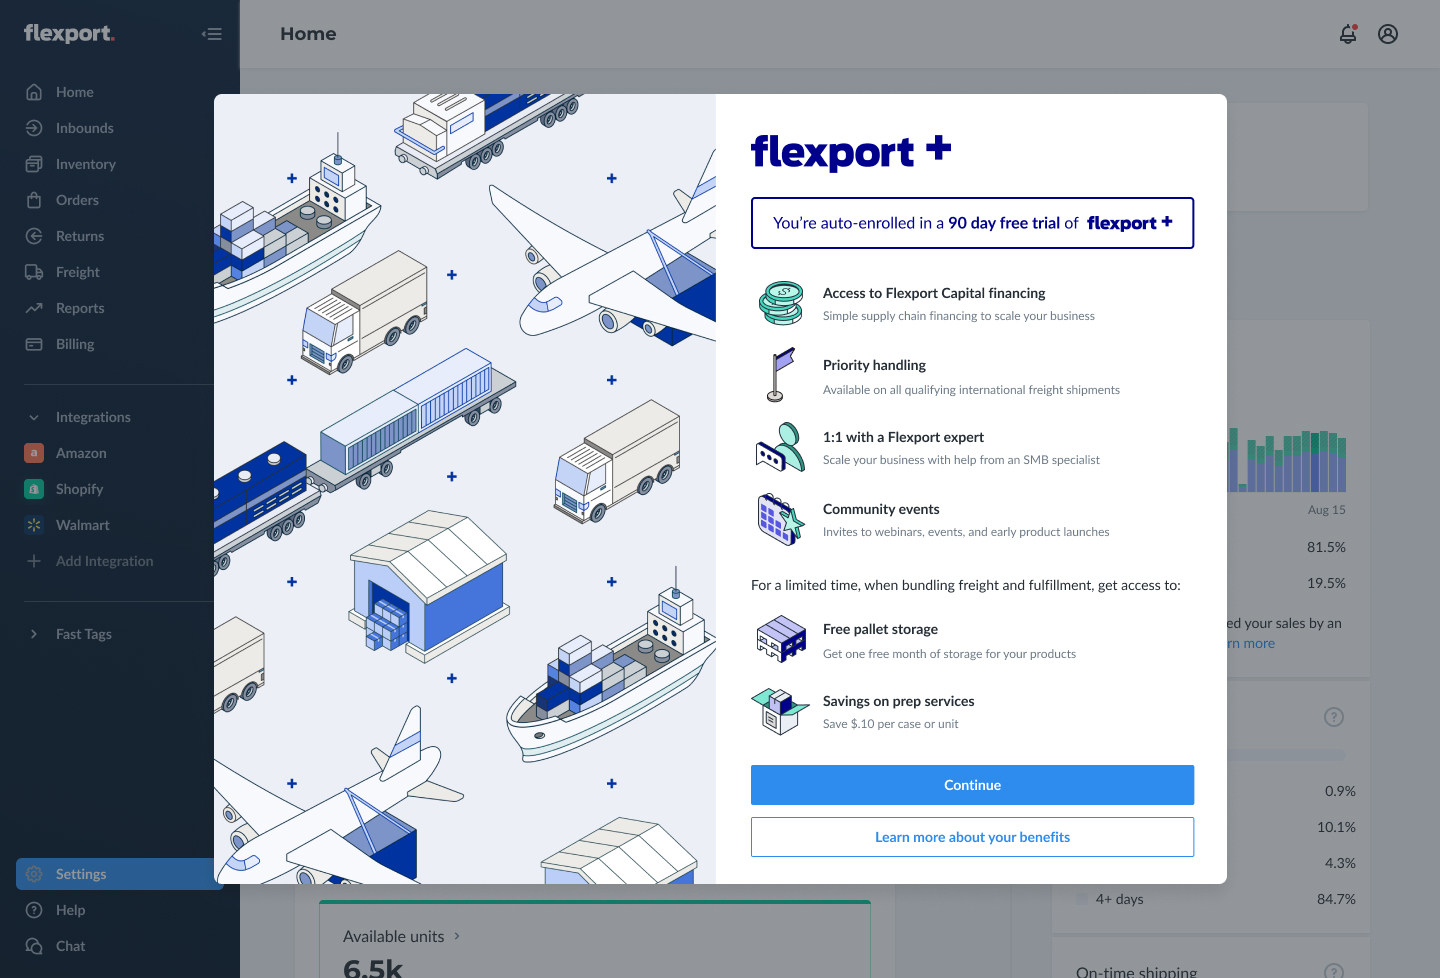 Flexport Launches a Revolution to Democratize Supply Chain for Entrepreneurs